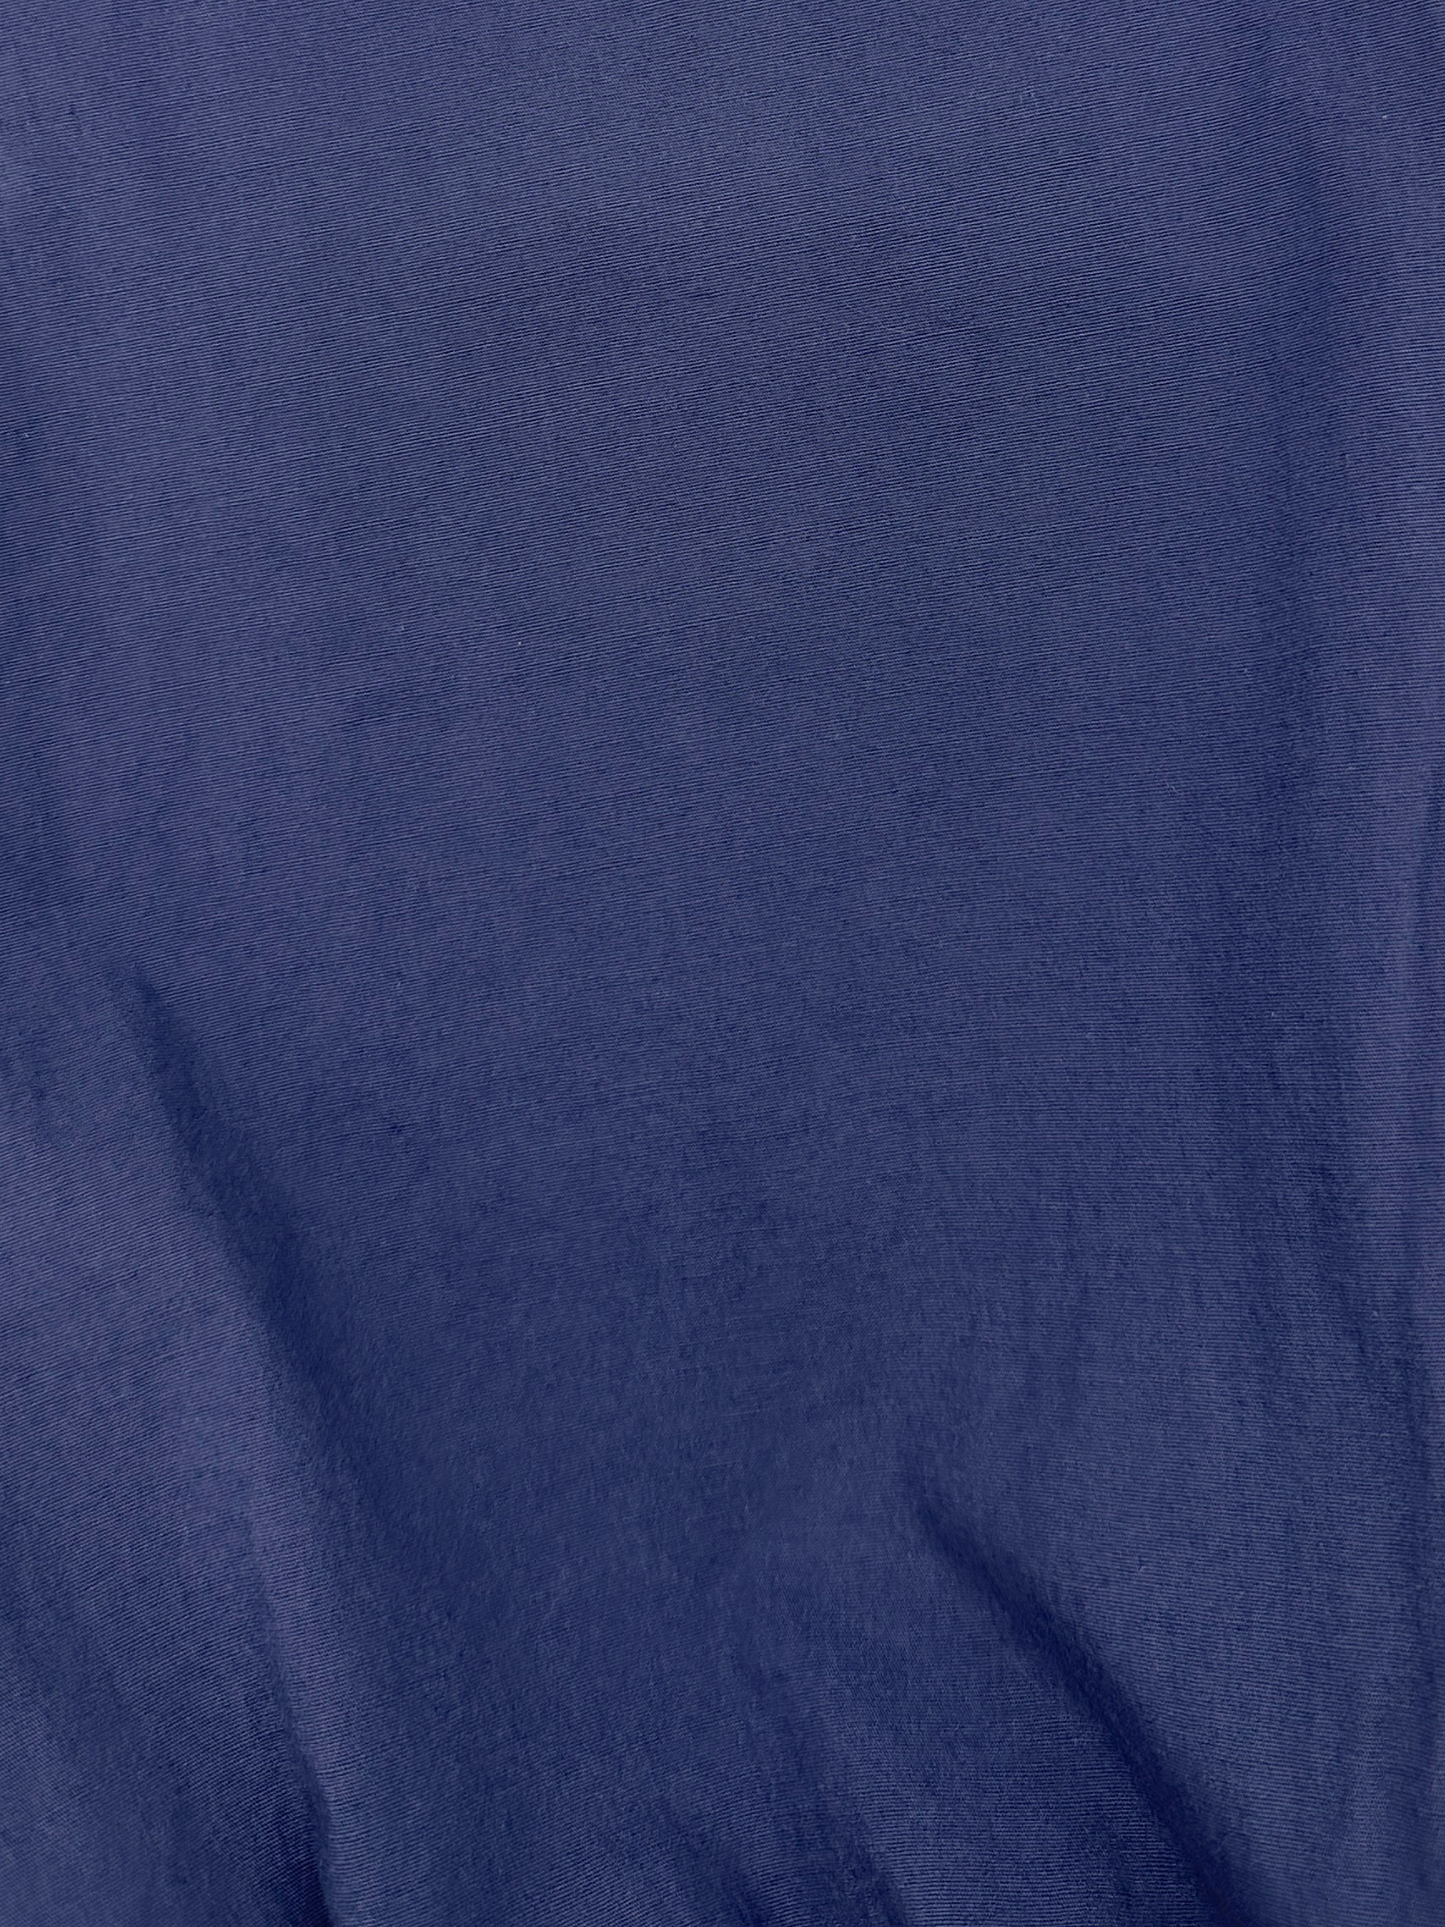 Bungee Shirt Blueberry M